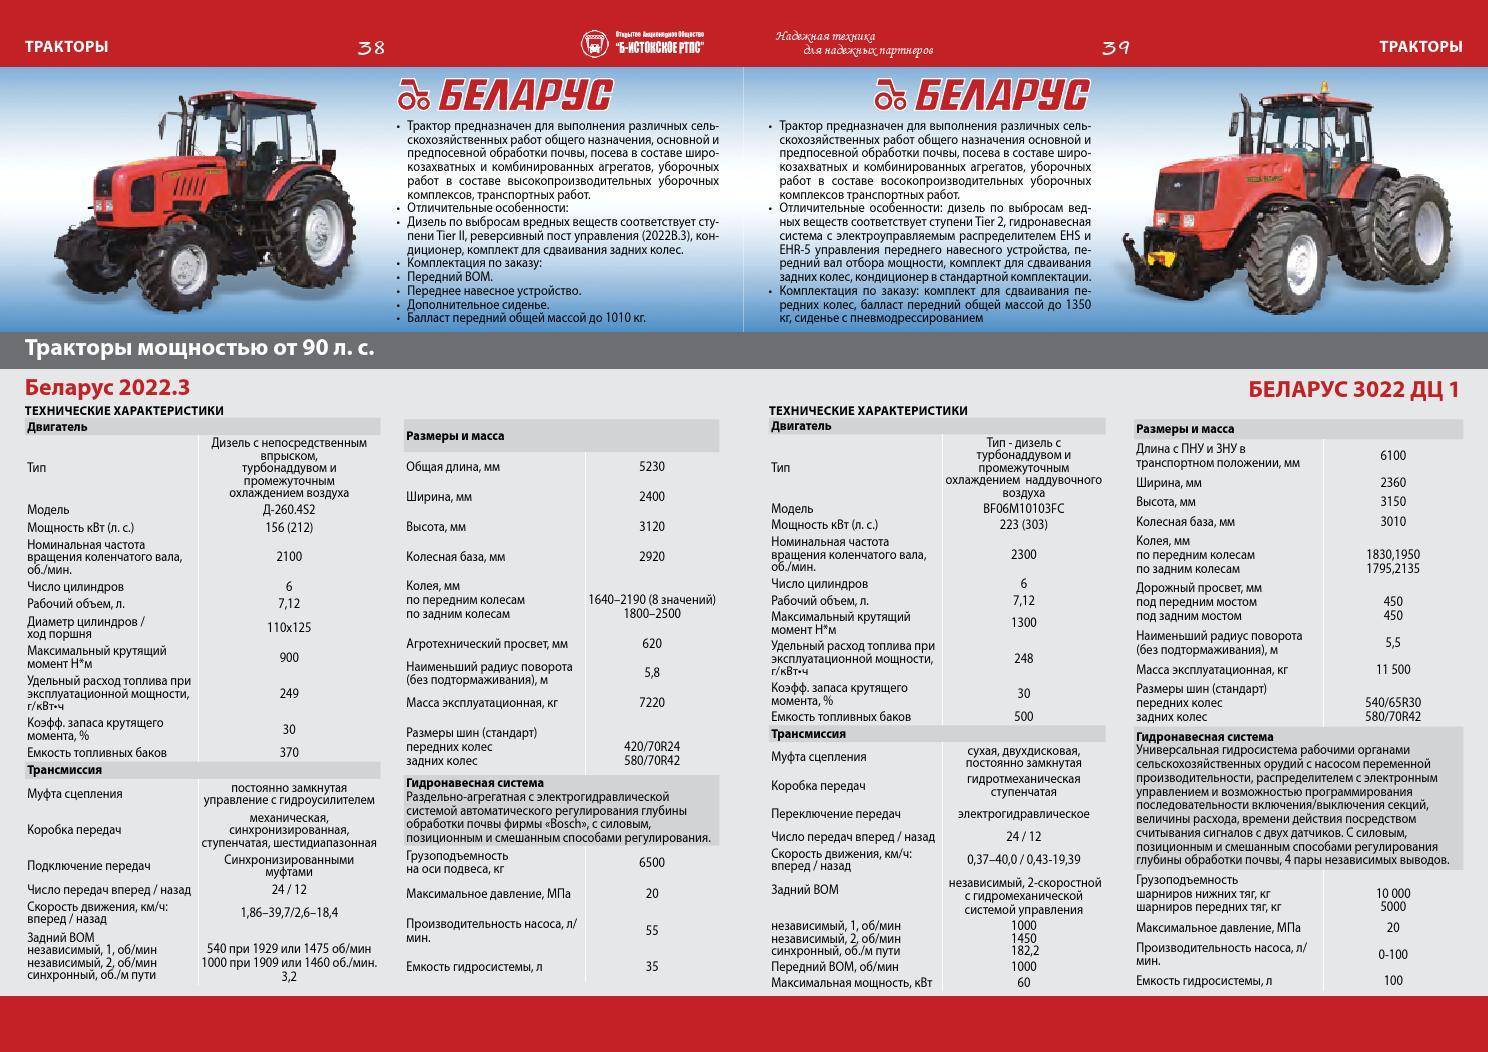 Мтз-50: технические характеристики, особенности эксплуатации трактора